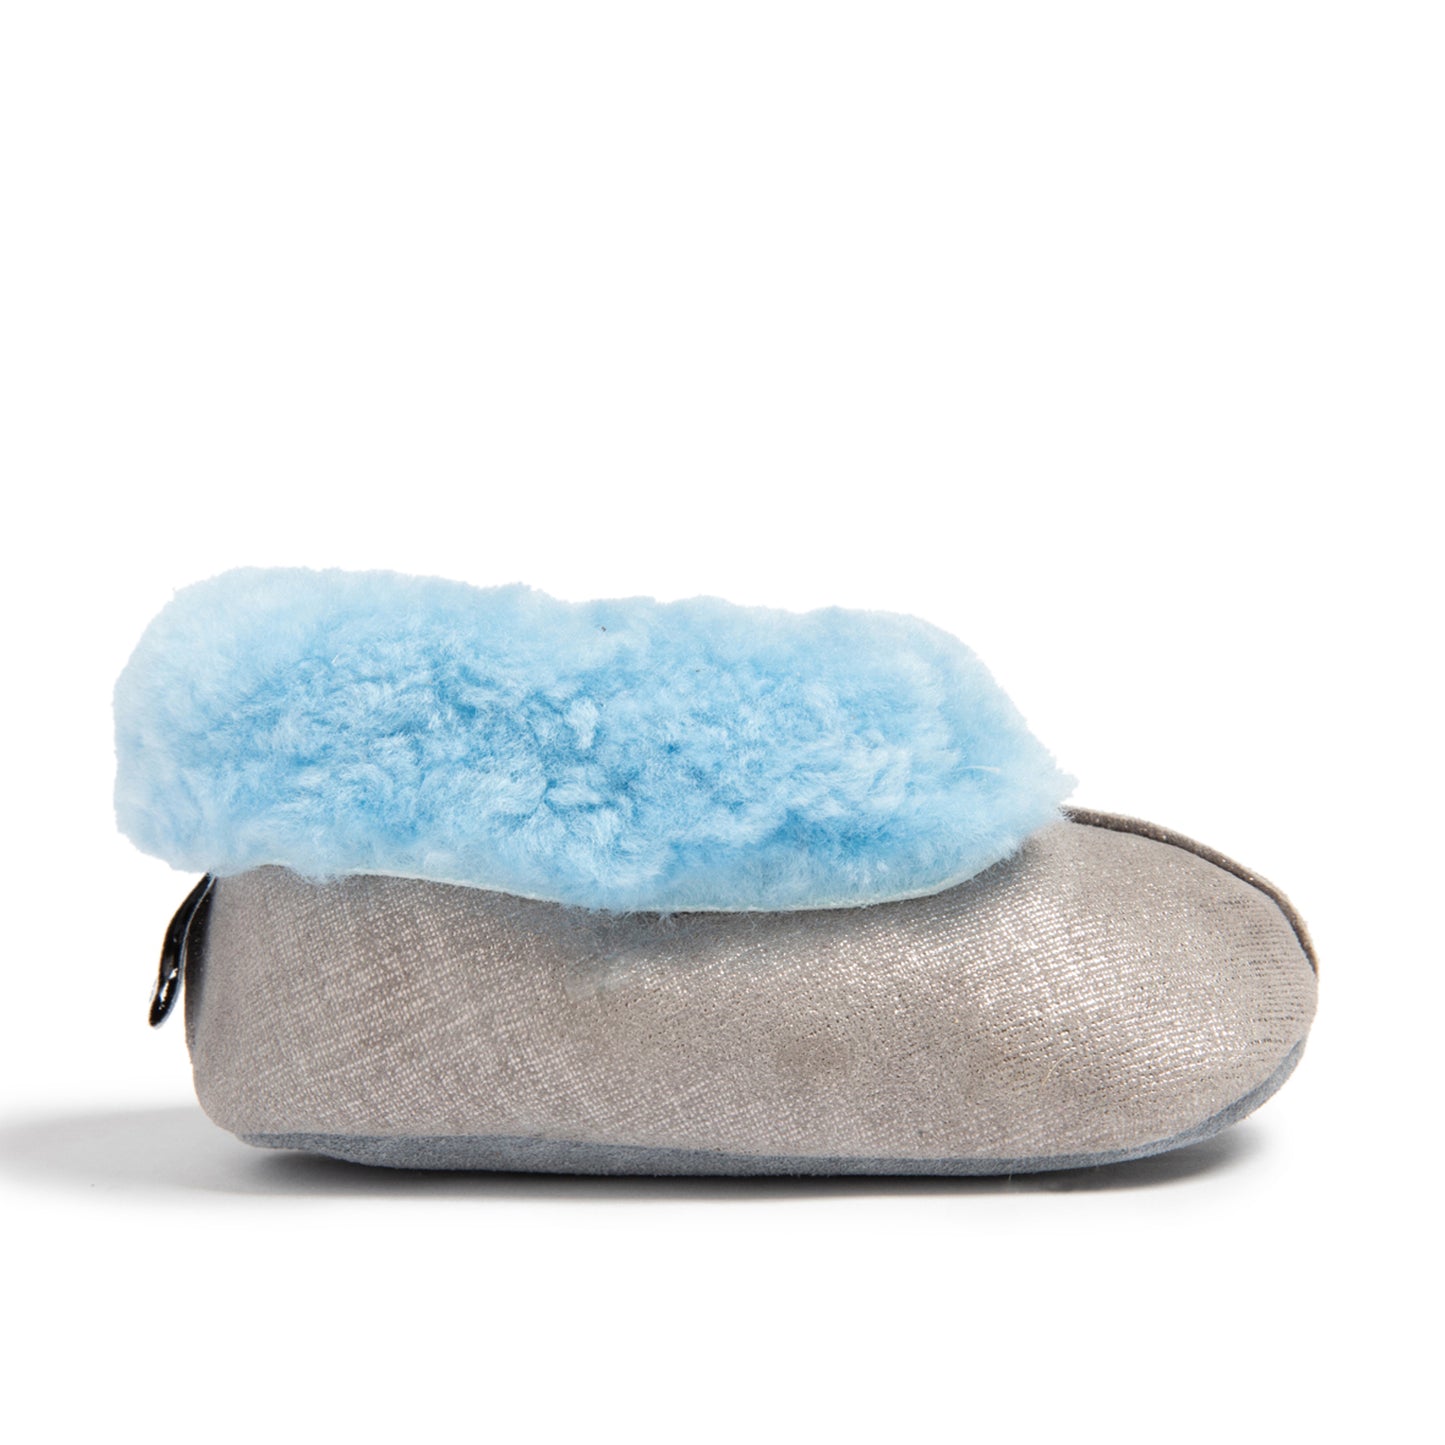 DASHER Soft Sole Slippers Grey & Blue - Shop Online | shooshoos.co.za